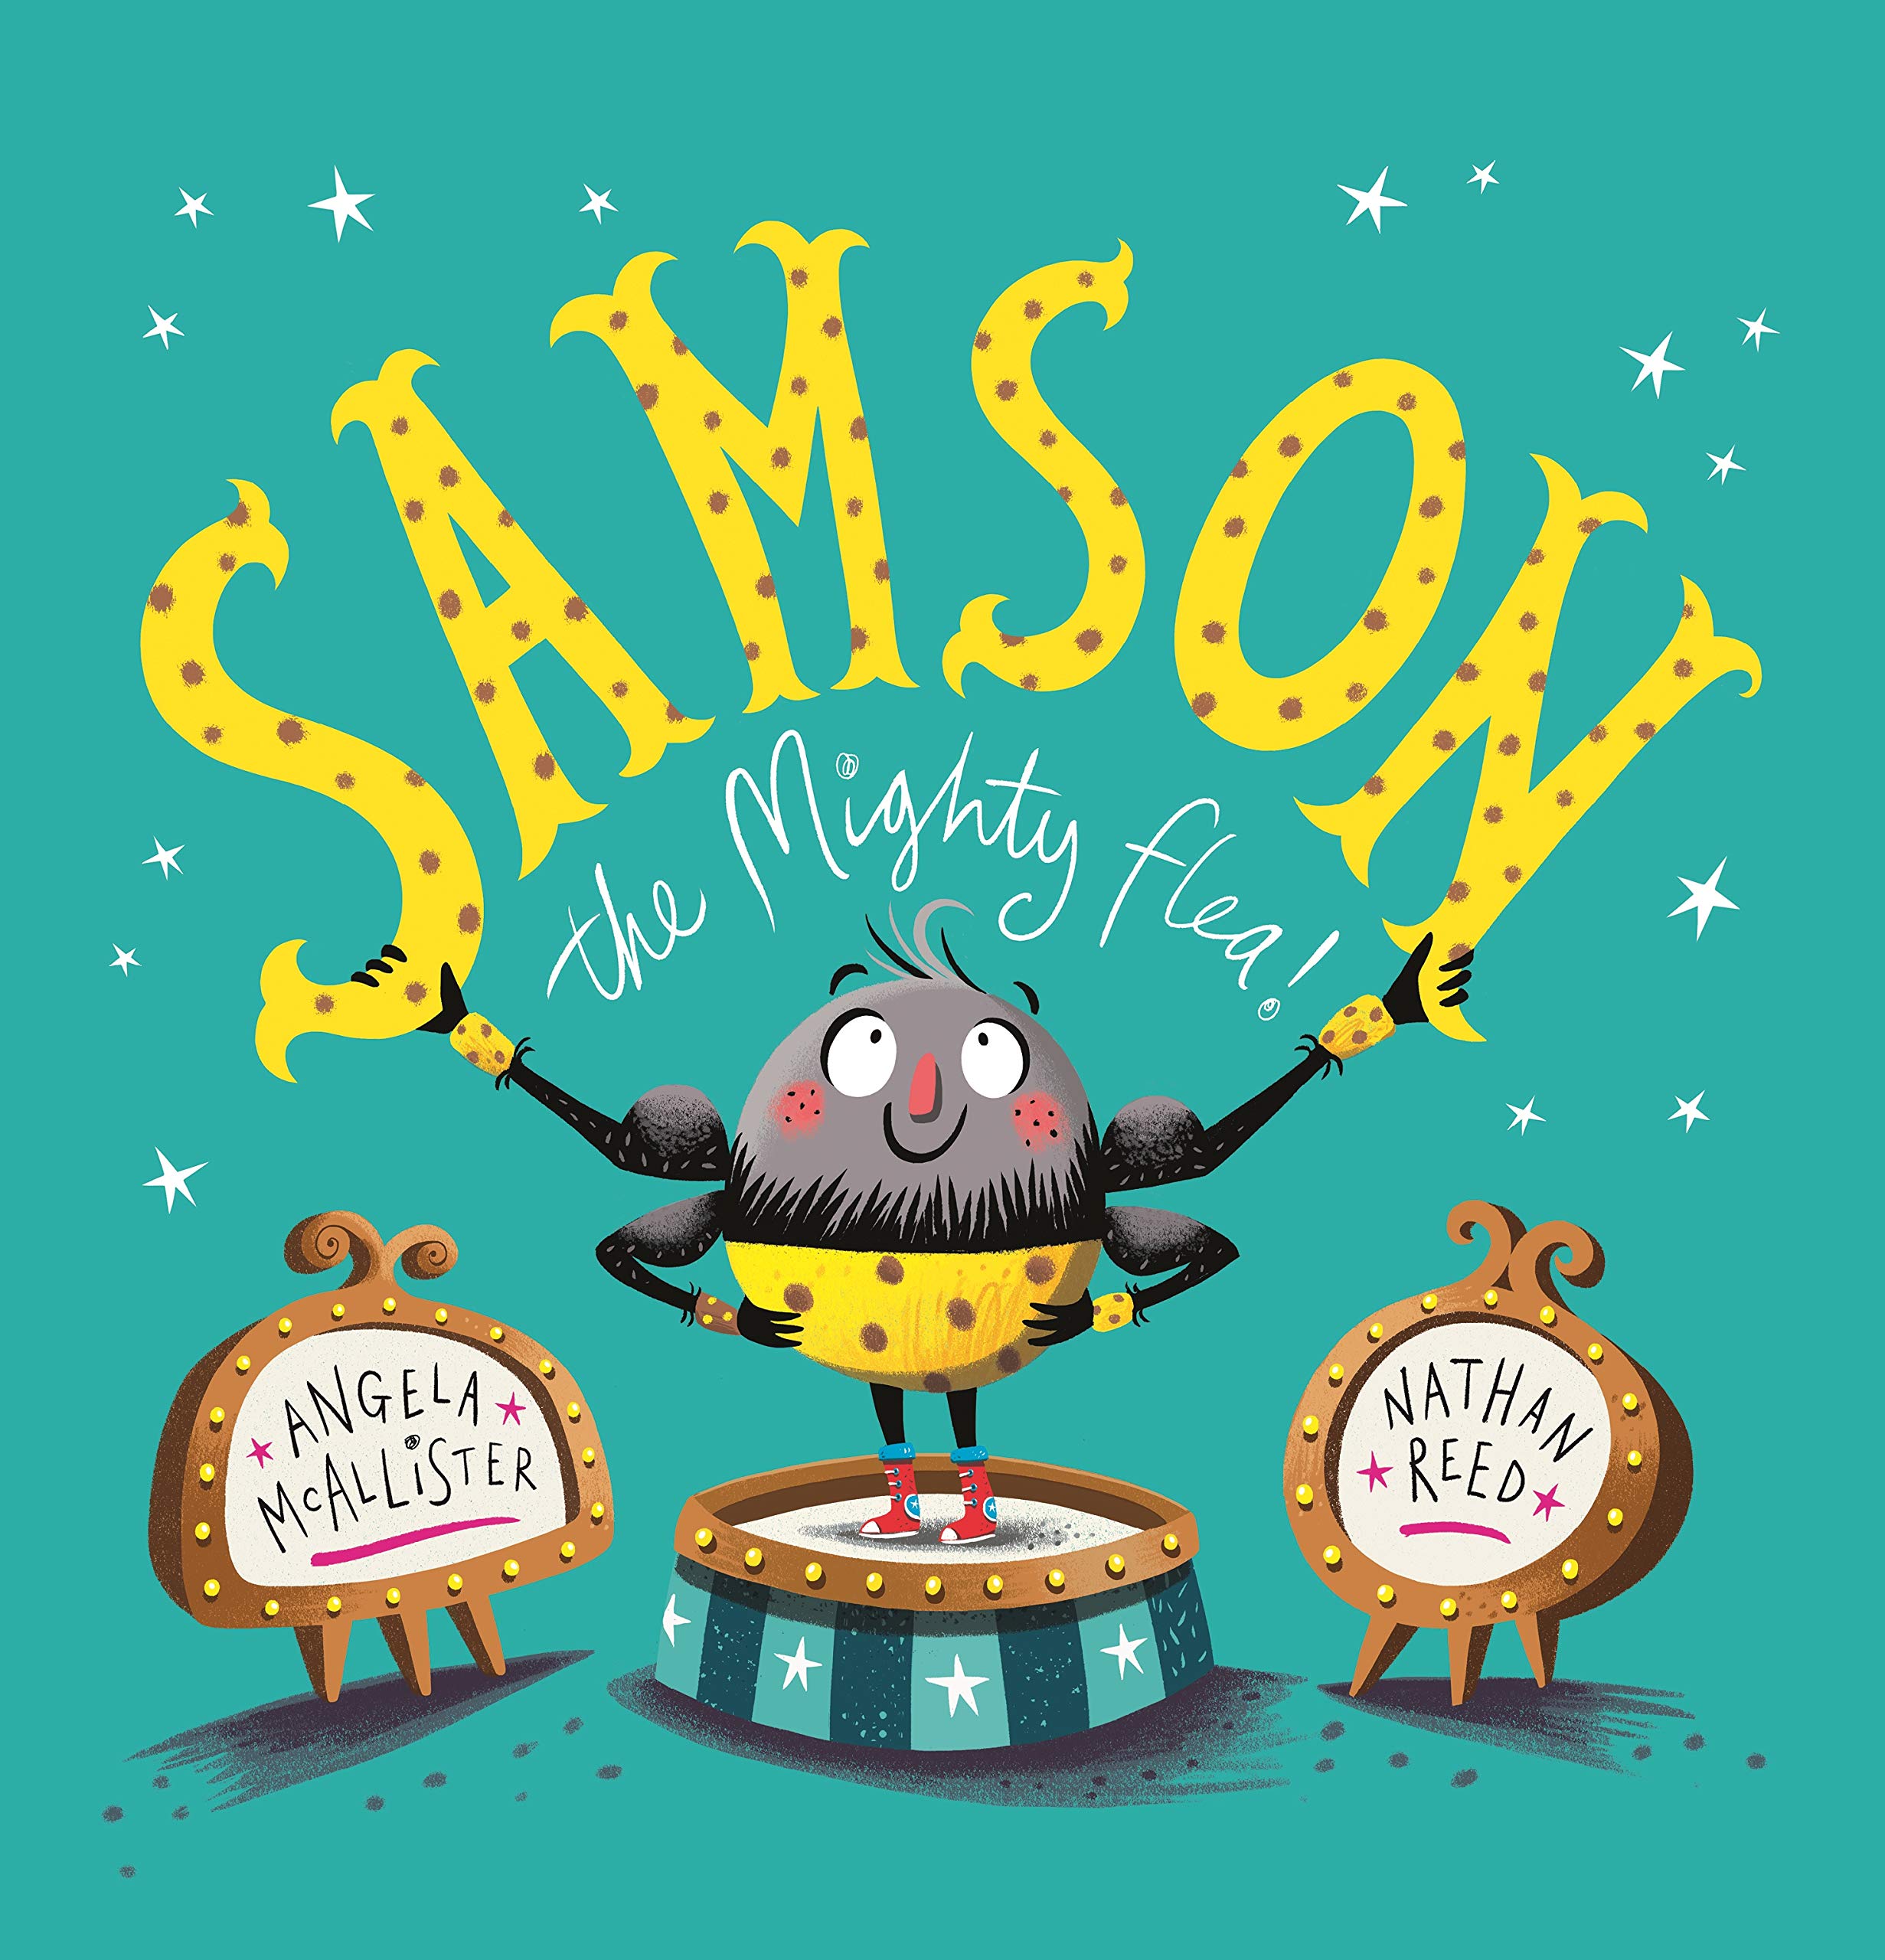 Samson: the Mighty Flea - Angela McAllister, Nathan Reed